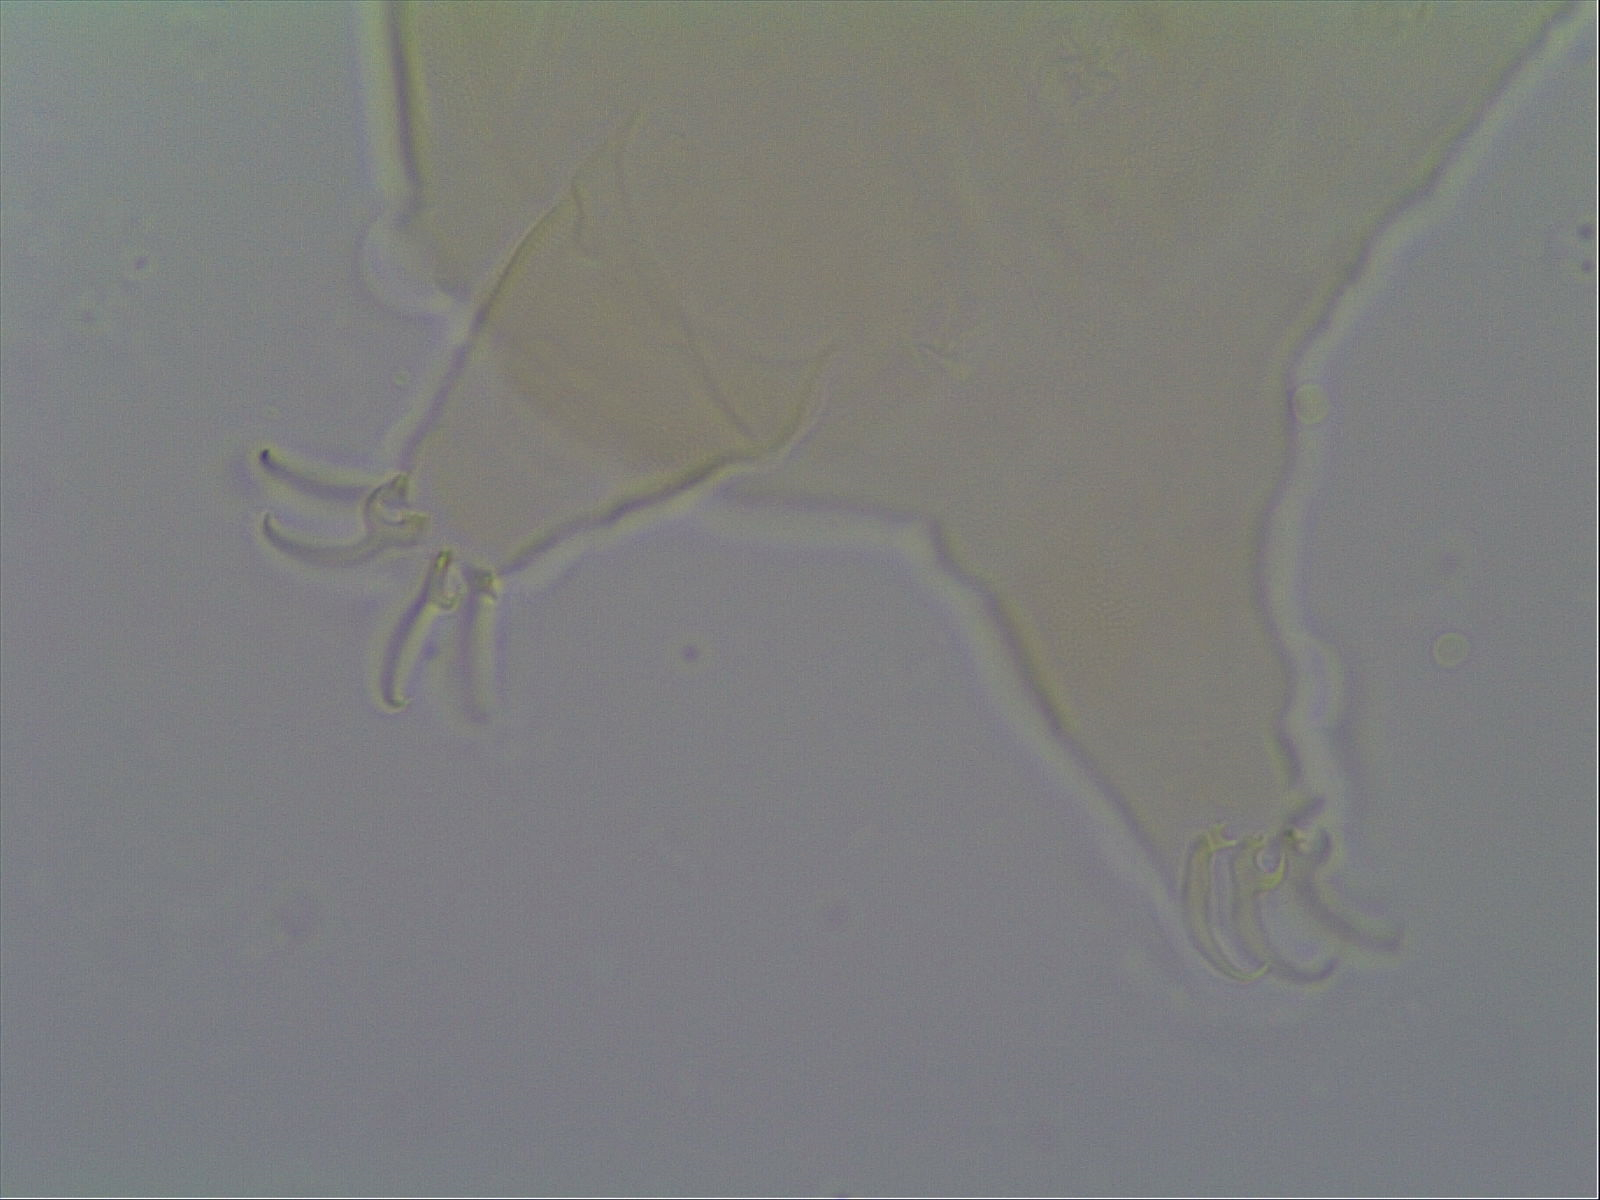 Hypechiniscus image